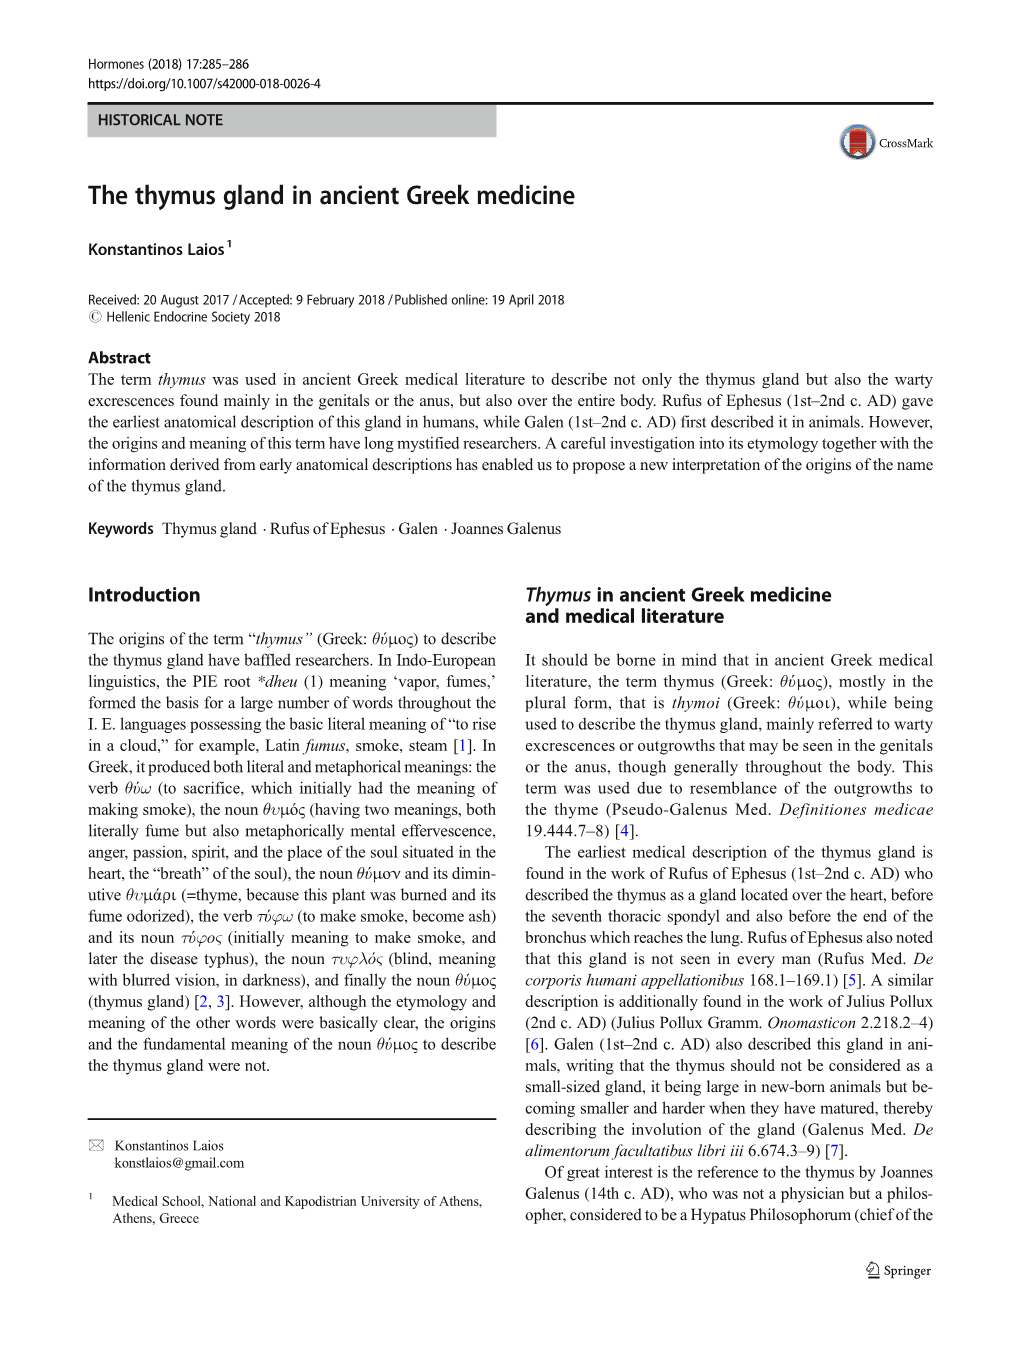 The Thymus Gland in Ancient Greek Medicine